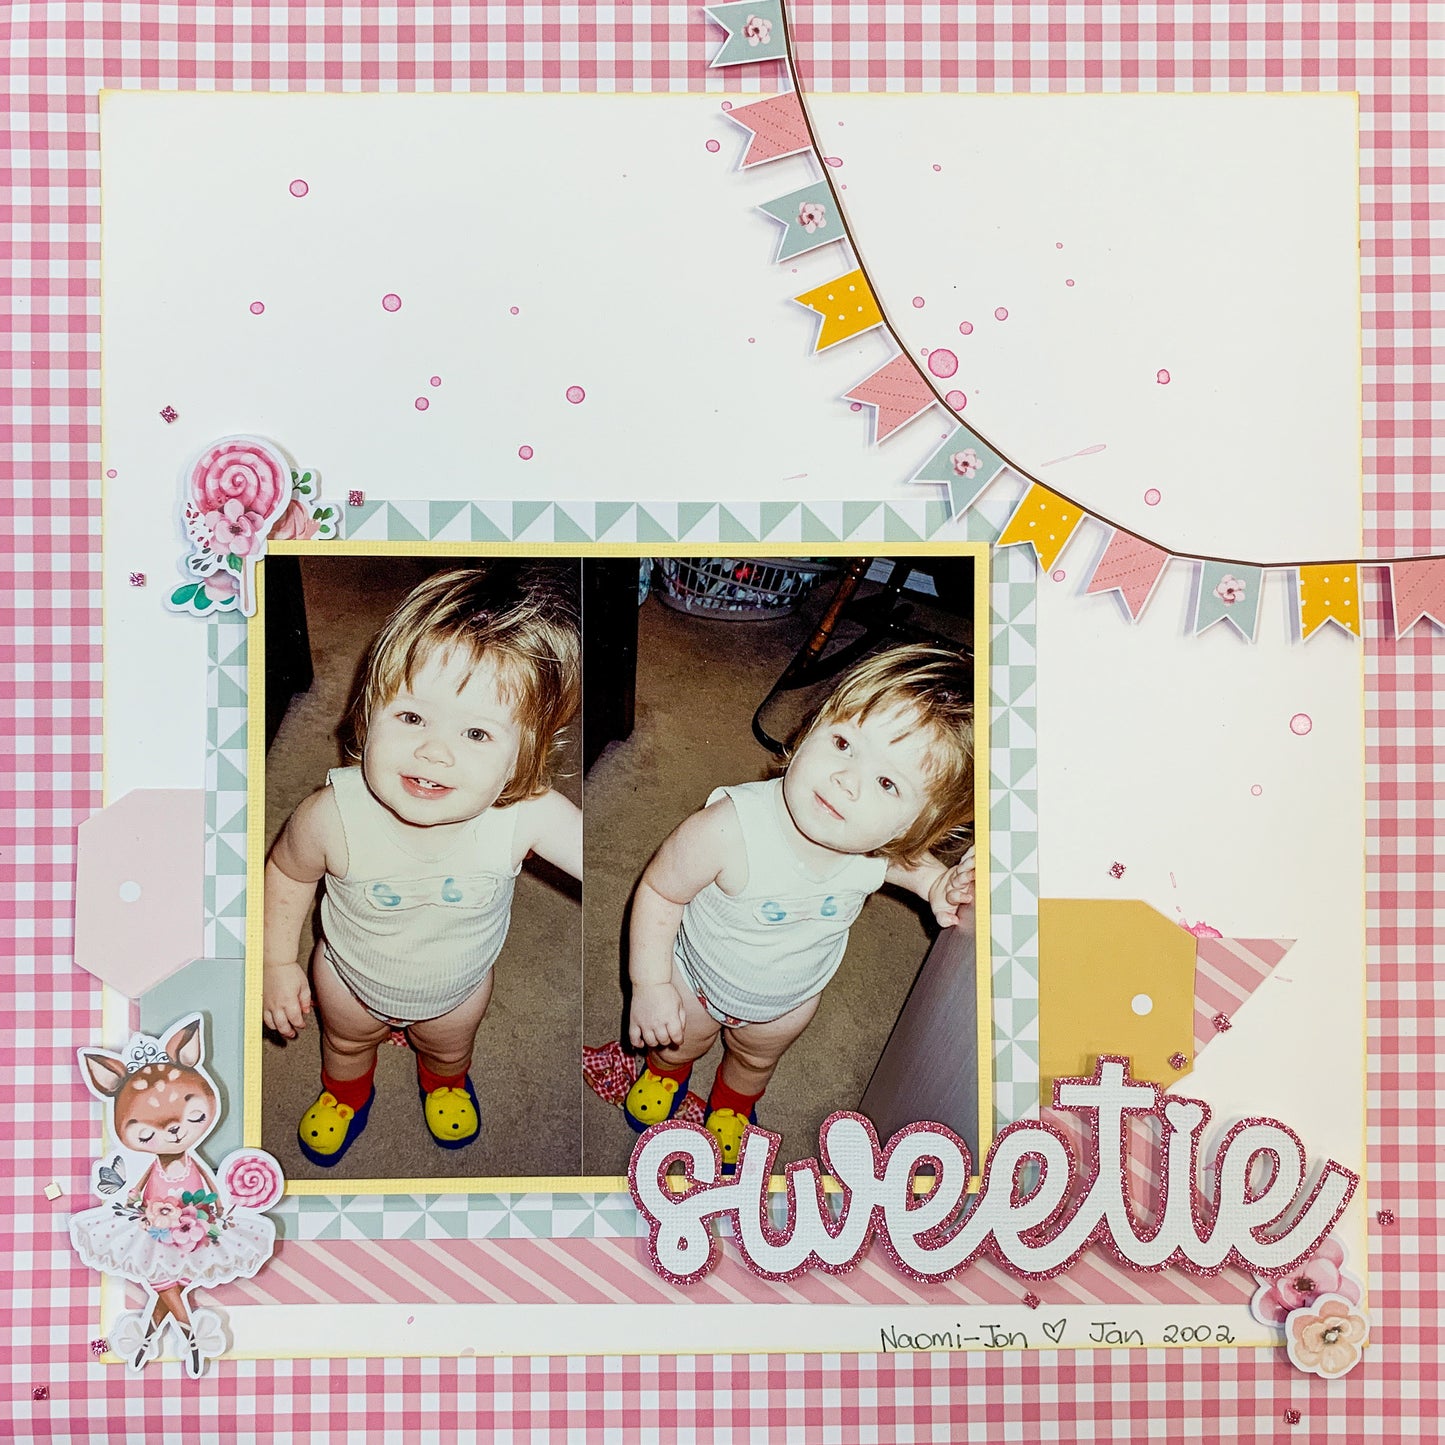 Tutu-Cute - sweetie (script) 5.75"x1.75" White Linen Cardstock Title-Cut - Designed by Alicia Redshaw